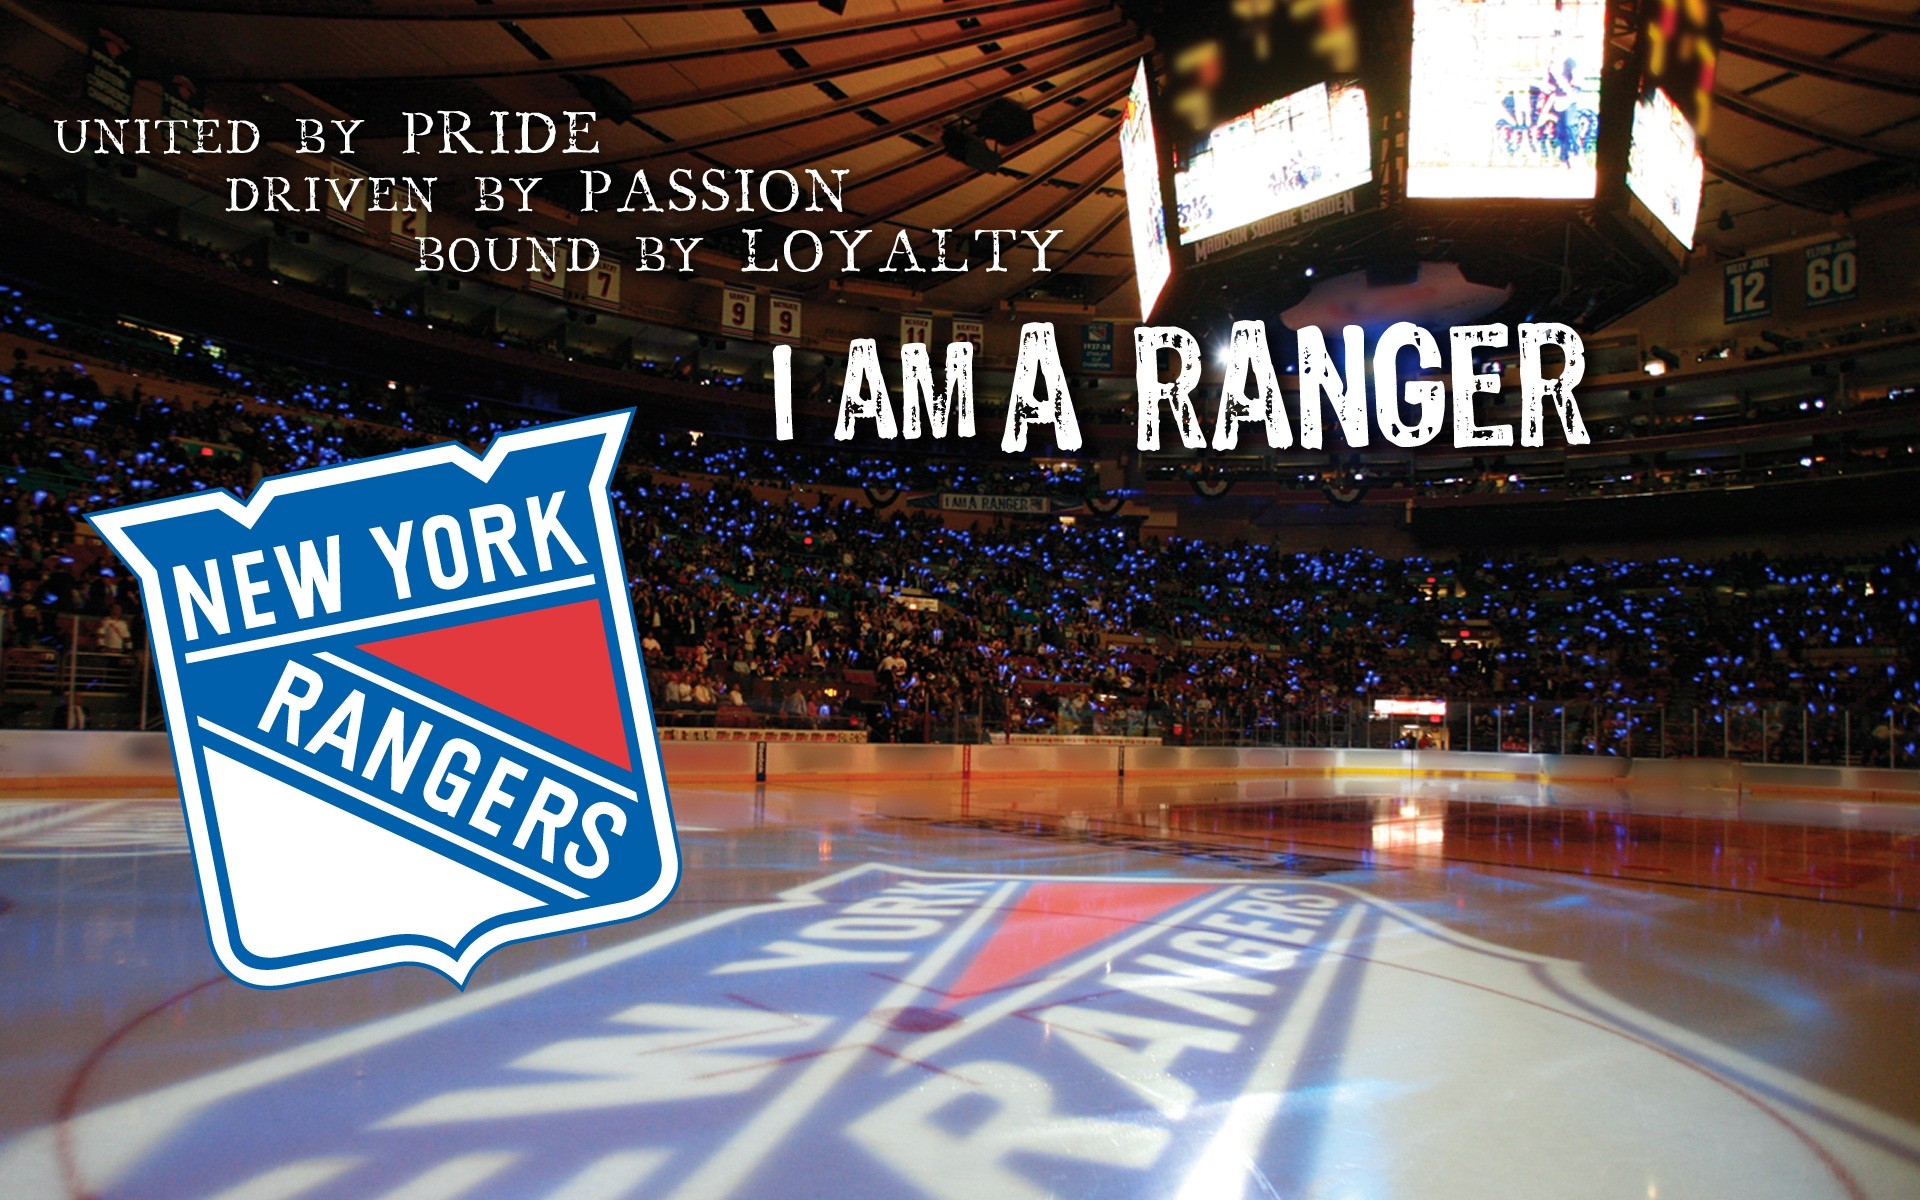 New York Rangers wallpapers for desktop, download free New York